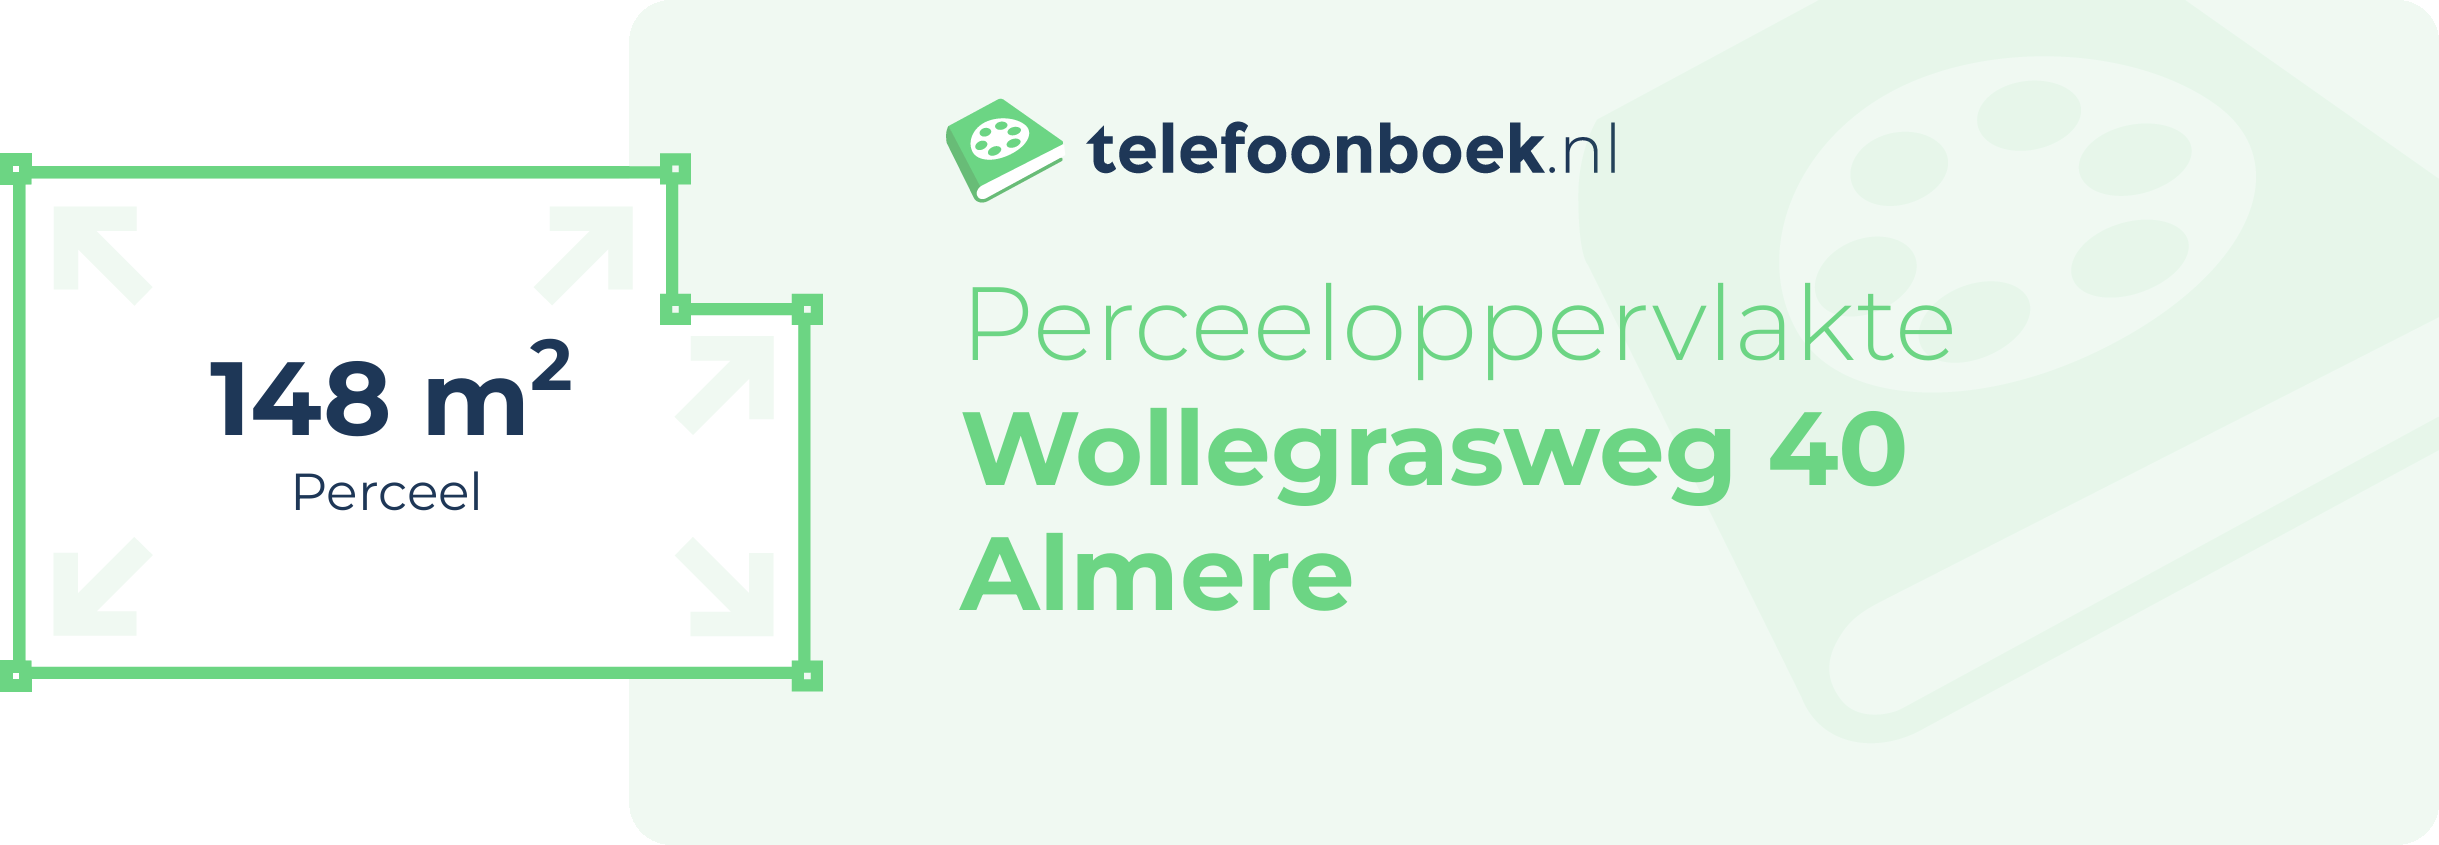 Perceeloppervlakte Wollegrasweg 40 Almere